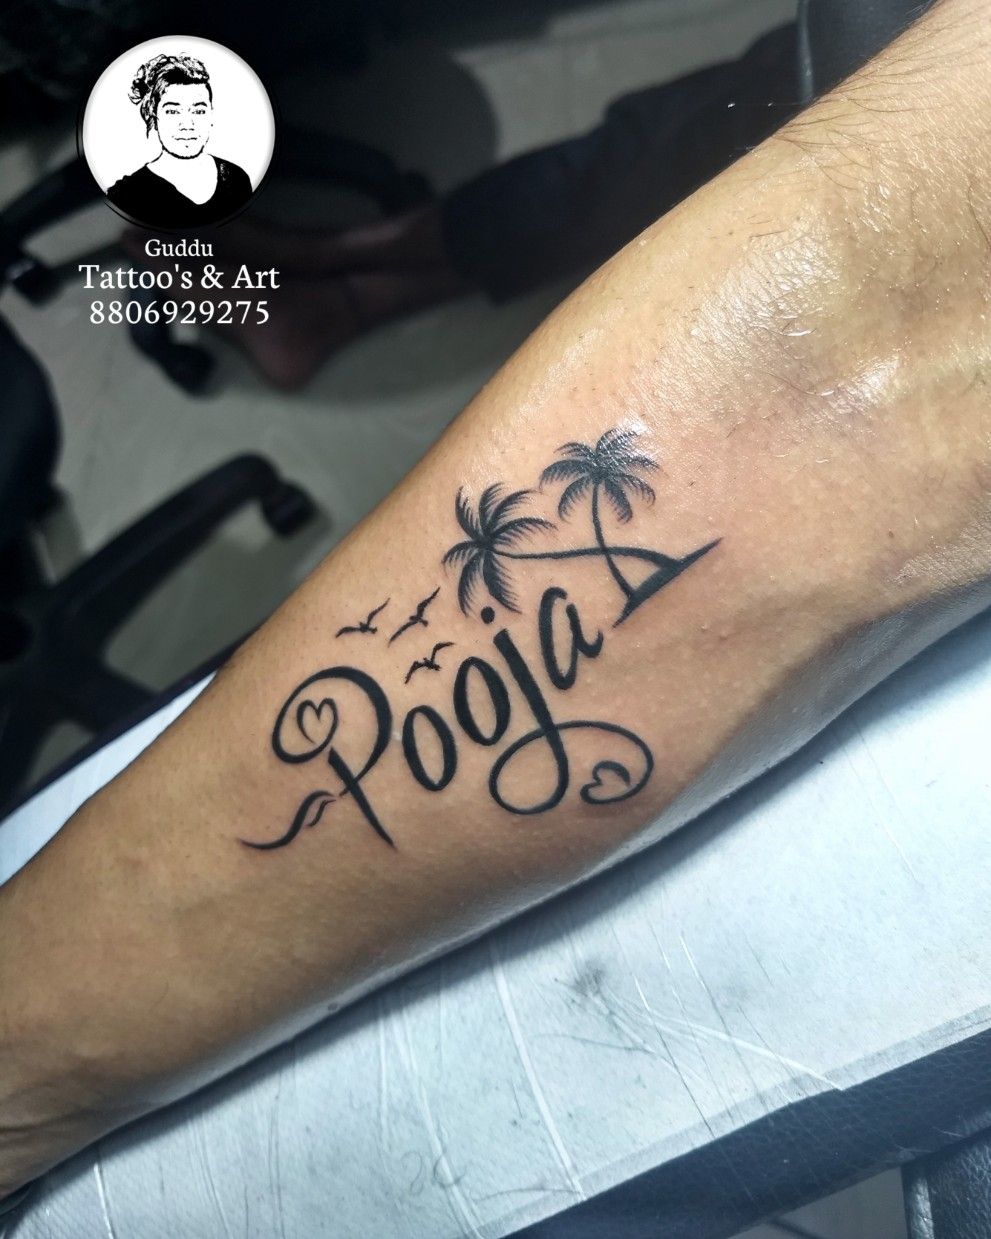 pooja name tattoo in hand